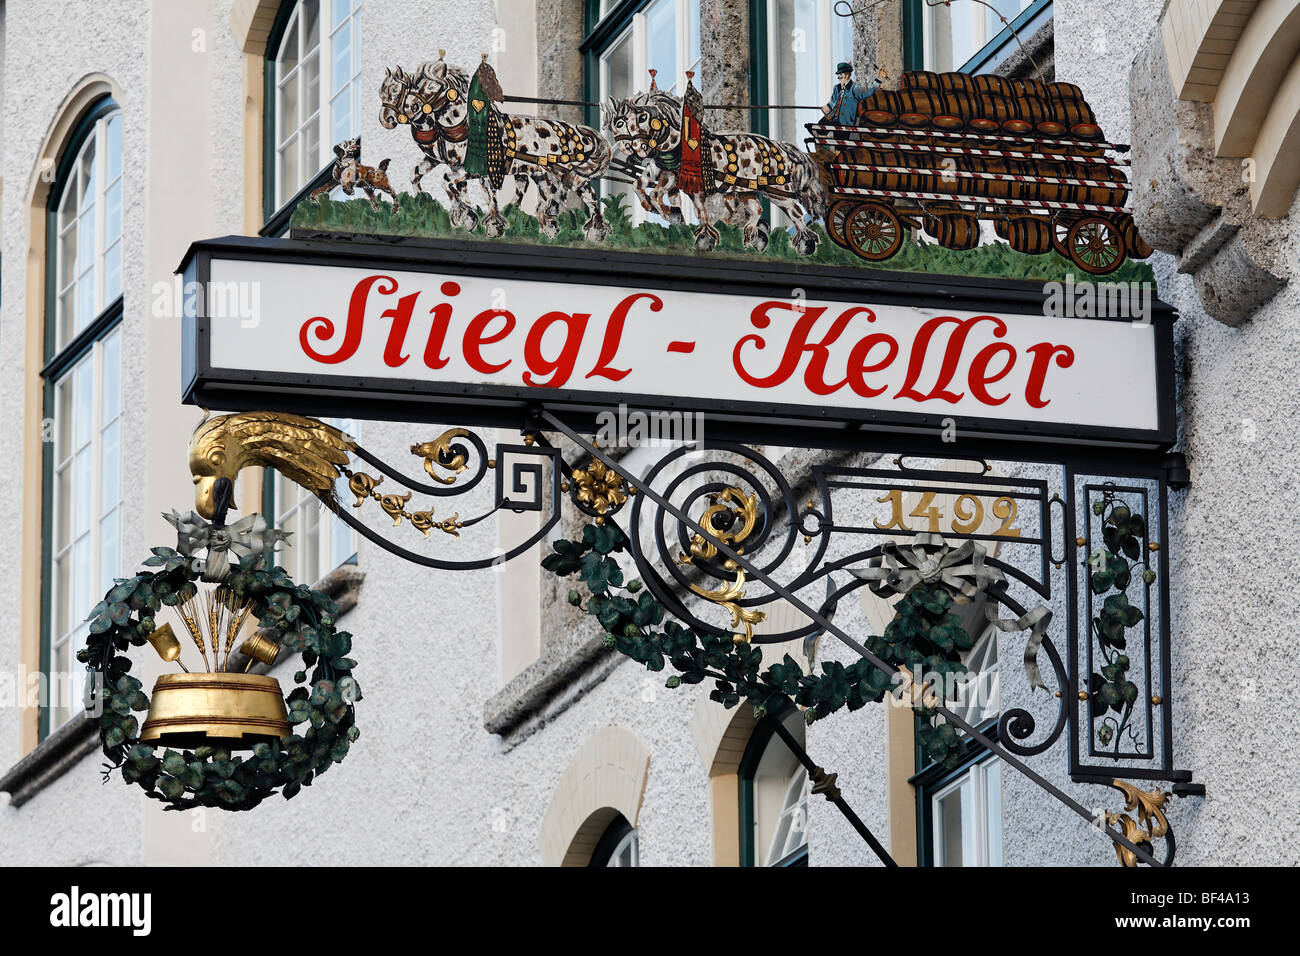 Wrought iron pub sign with beer coach, traditional restaurant Stieglkeller, Salzburg, Austria, Europe Stock Photo